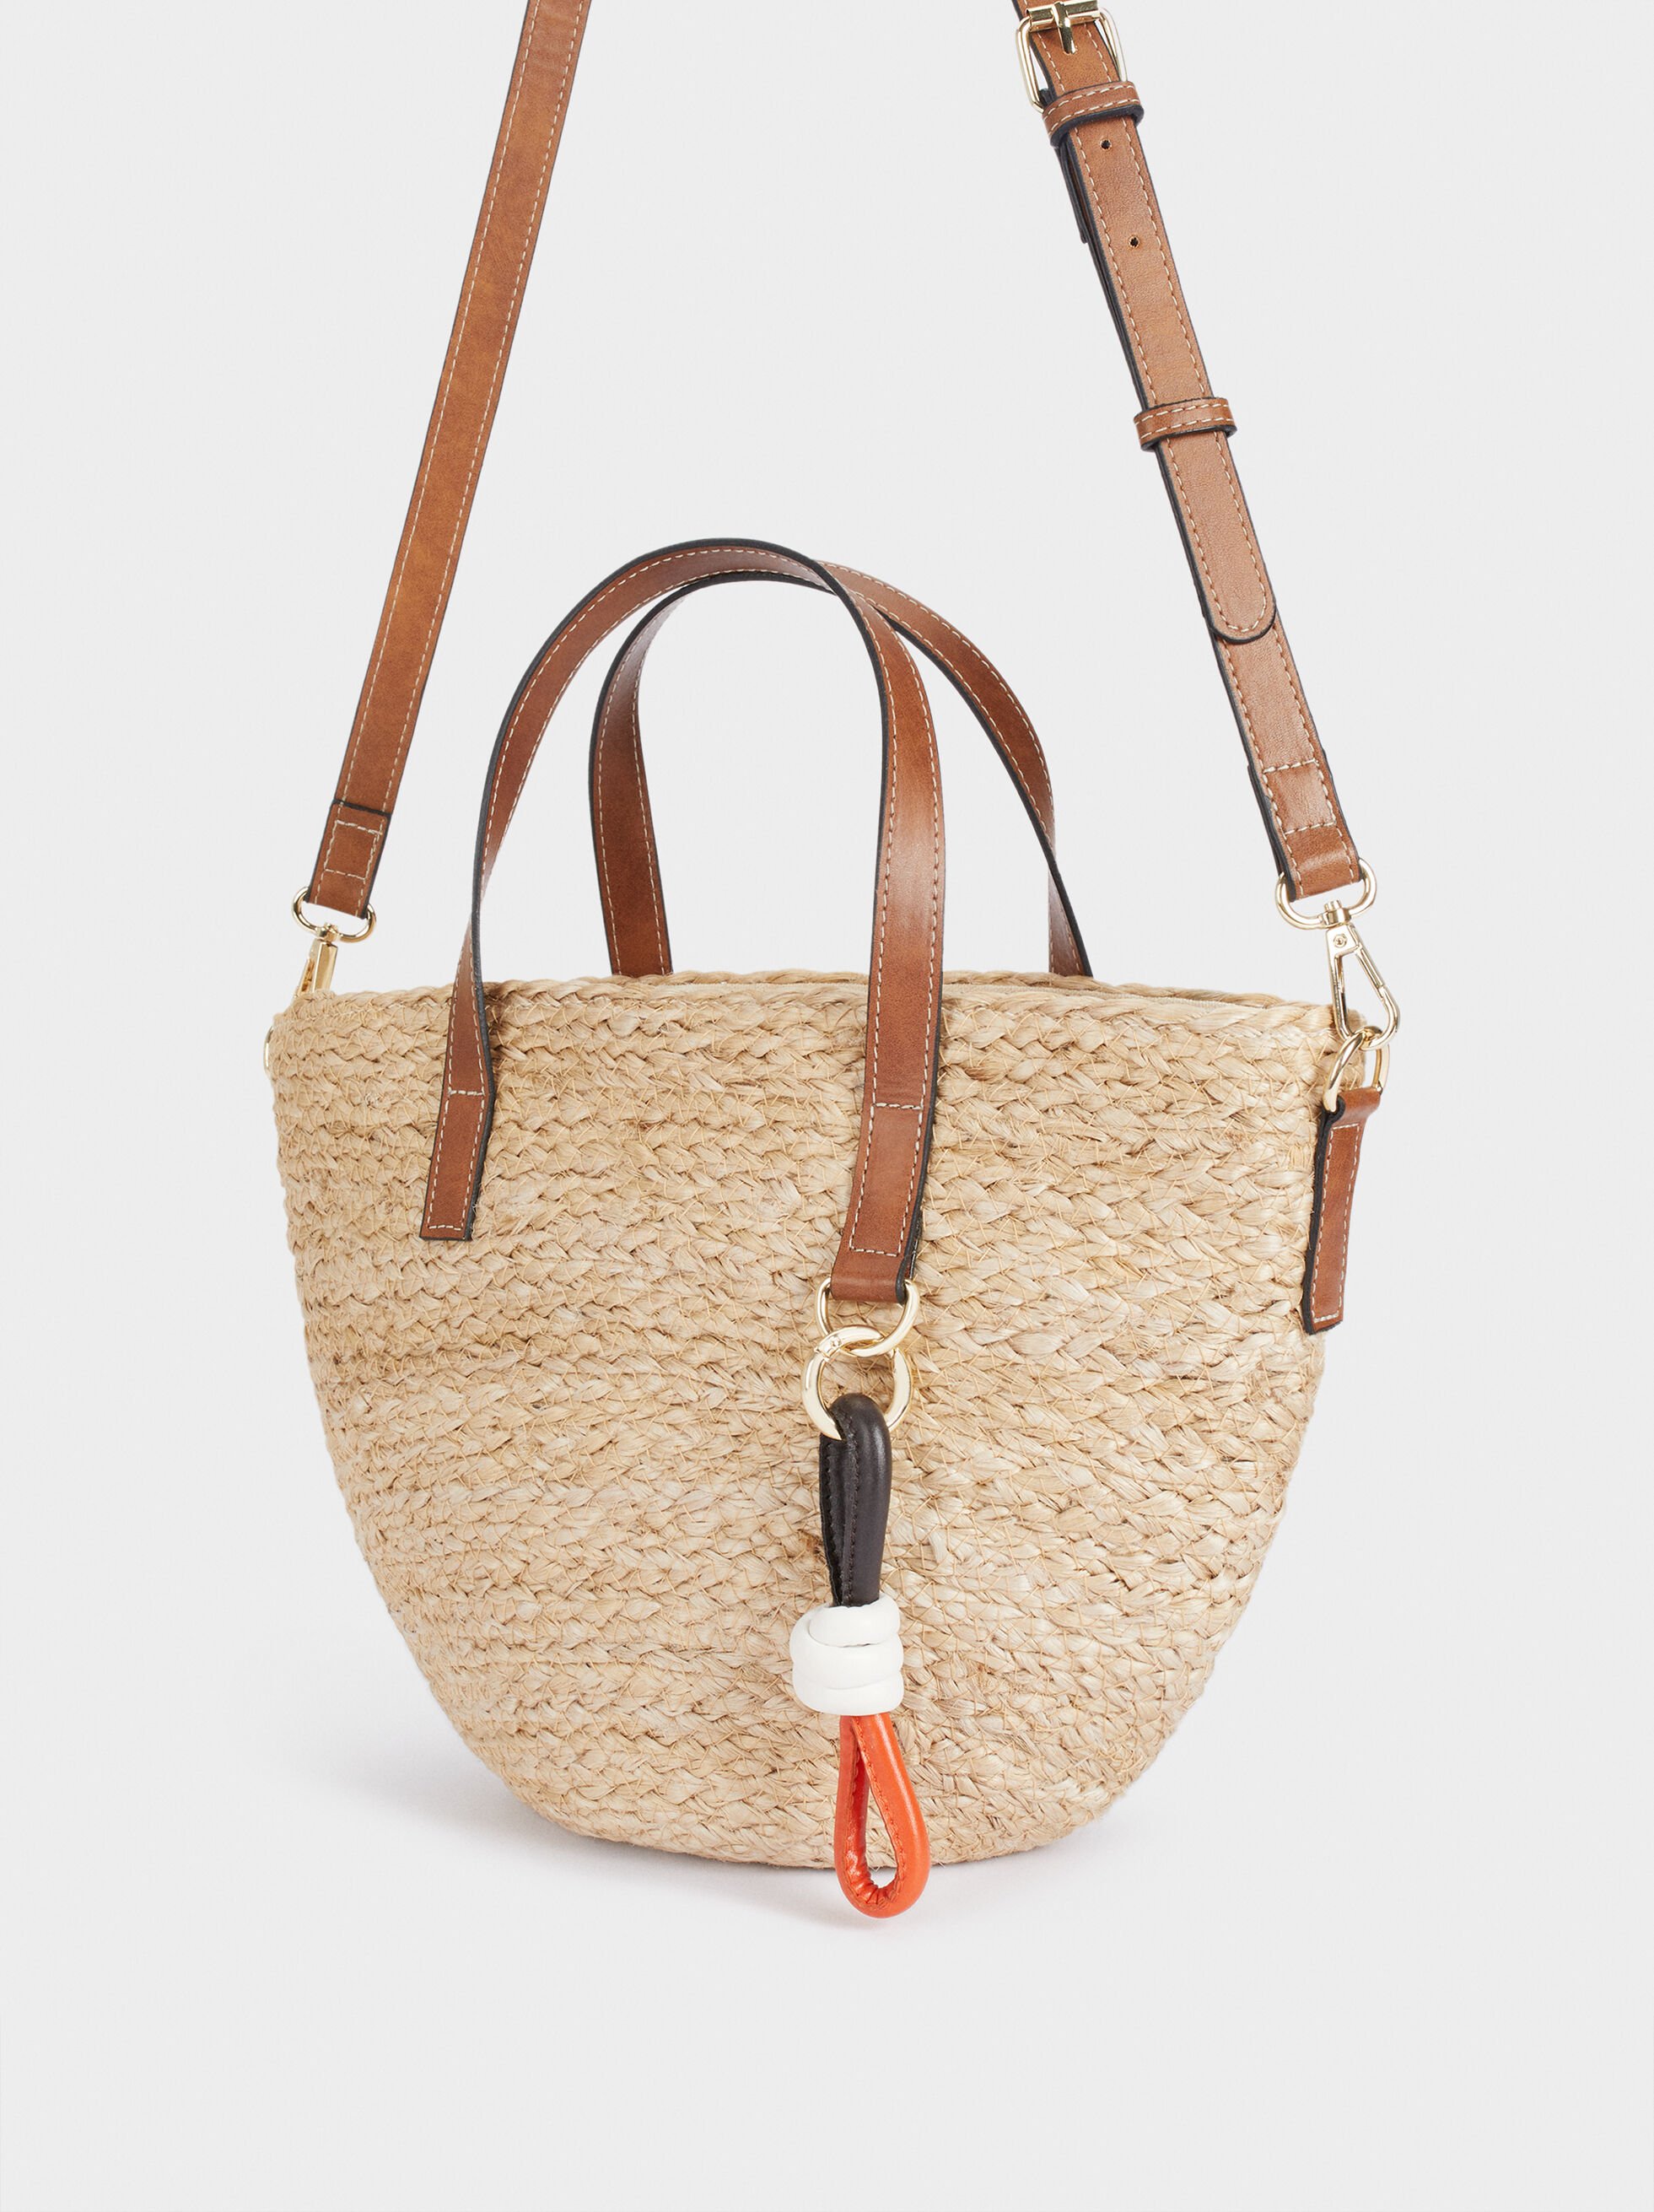 Jute Tote Bag With Pendant - Straw - Woman - Handbags - parfois.com